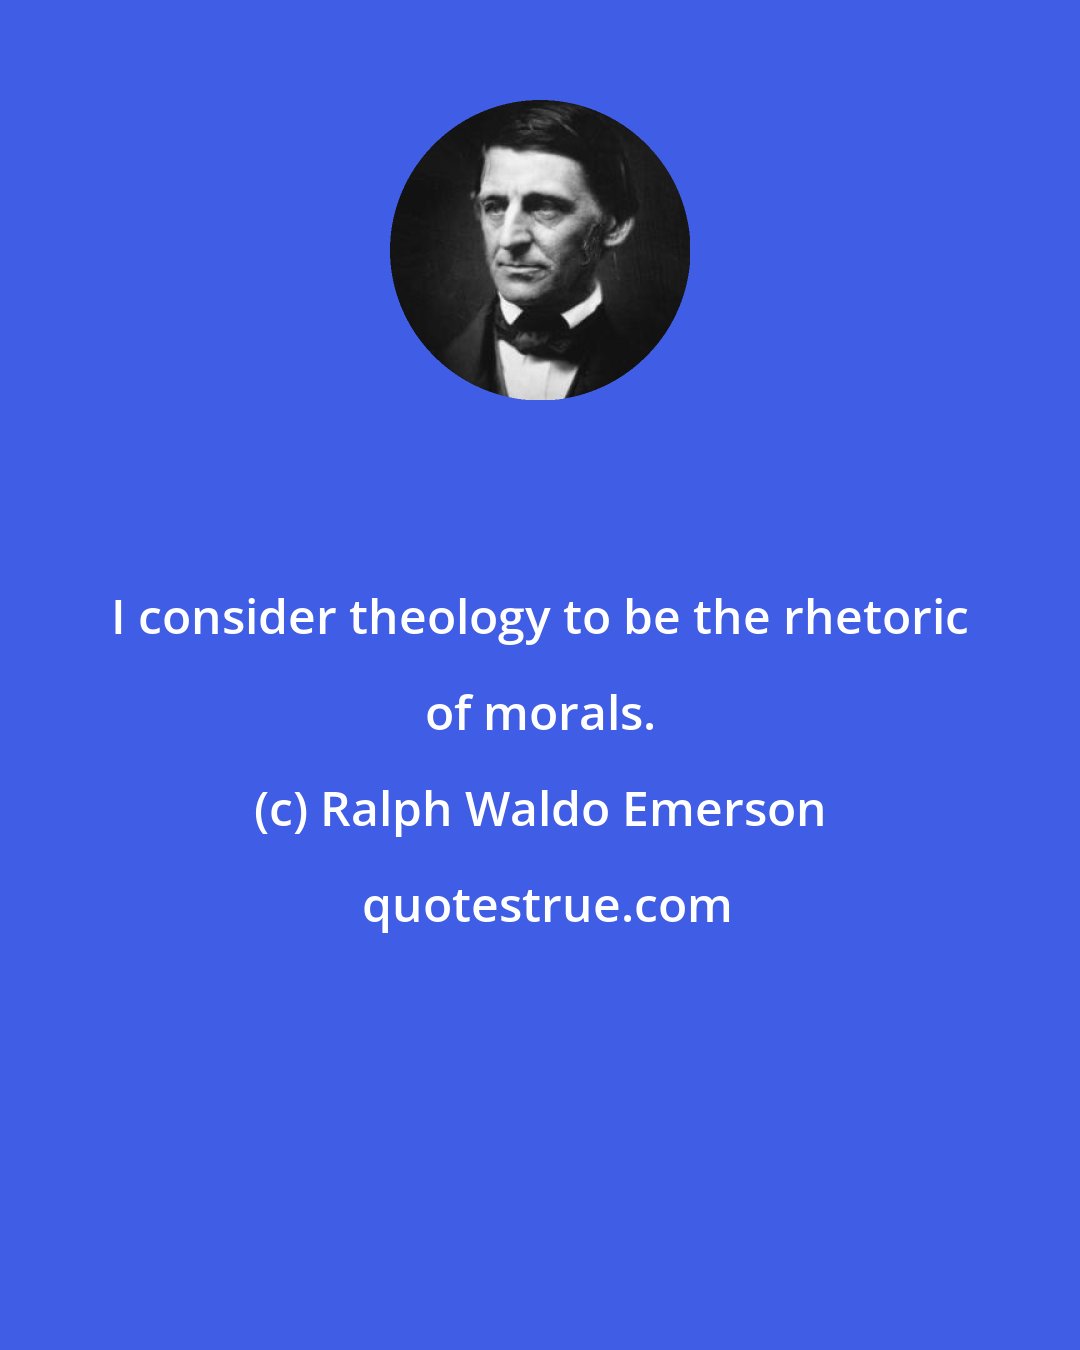 Ralph Waldo Emerson: I consider theology to be the rhetoric of morals.